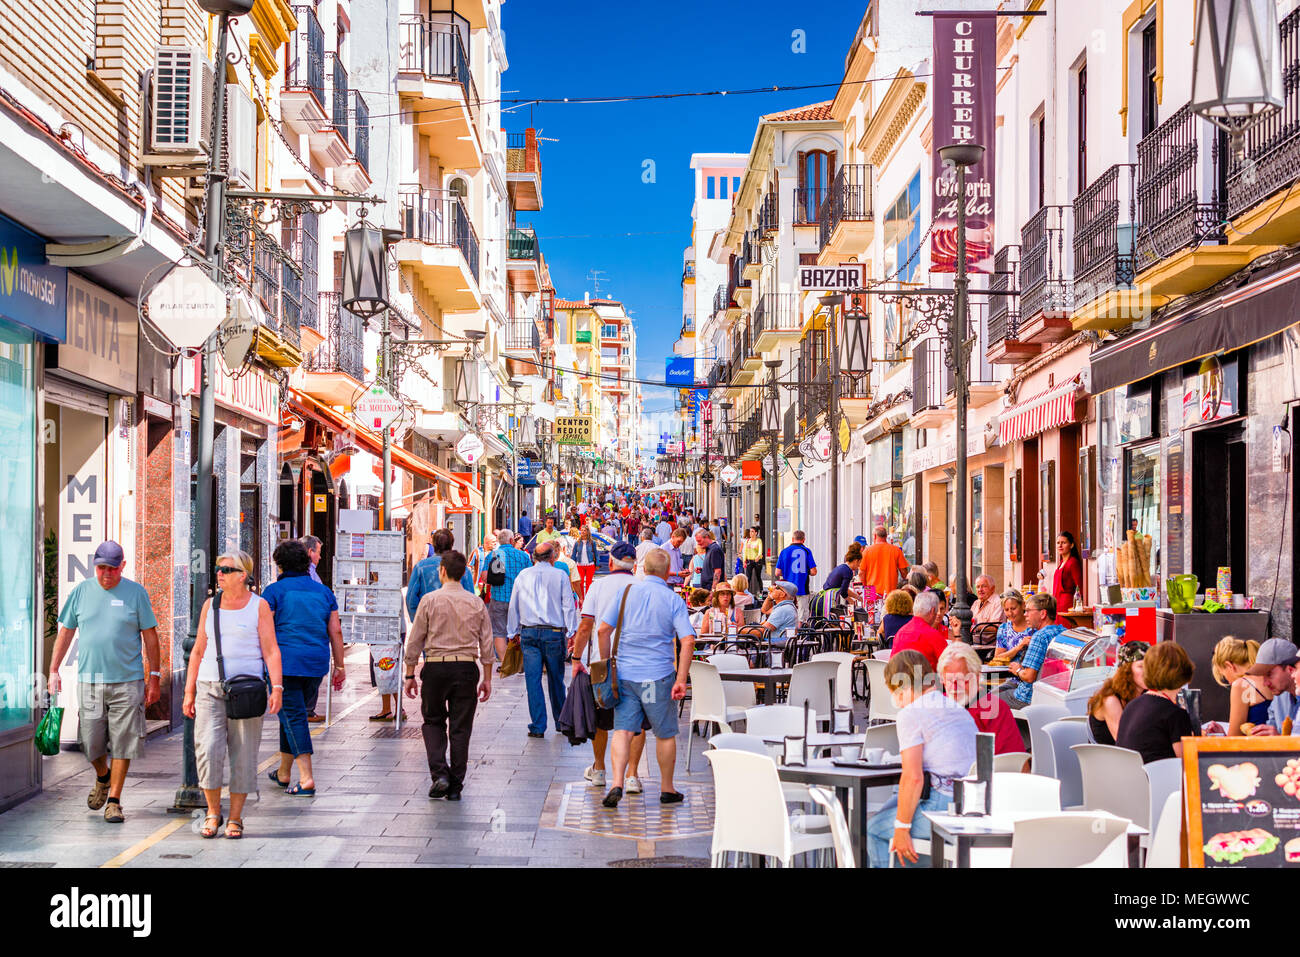 RONDA, SPAIN - OCTOBER 5, 2014: Crowds walk on Calle La Bola pedestrian shopping street in Ronda. Stock Photo